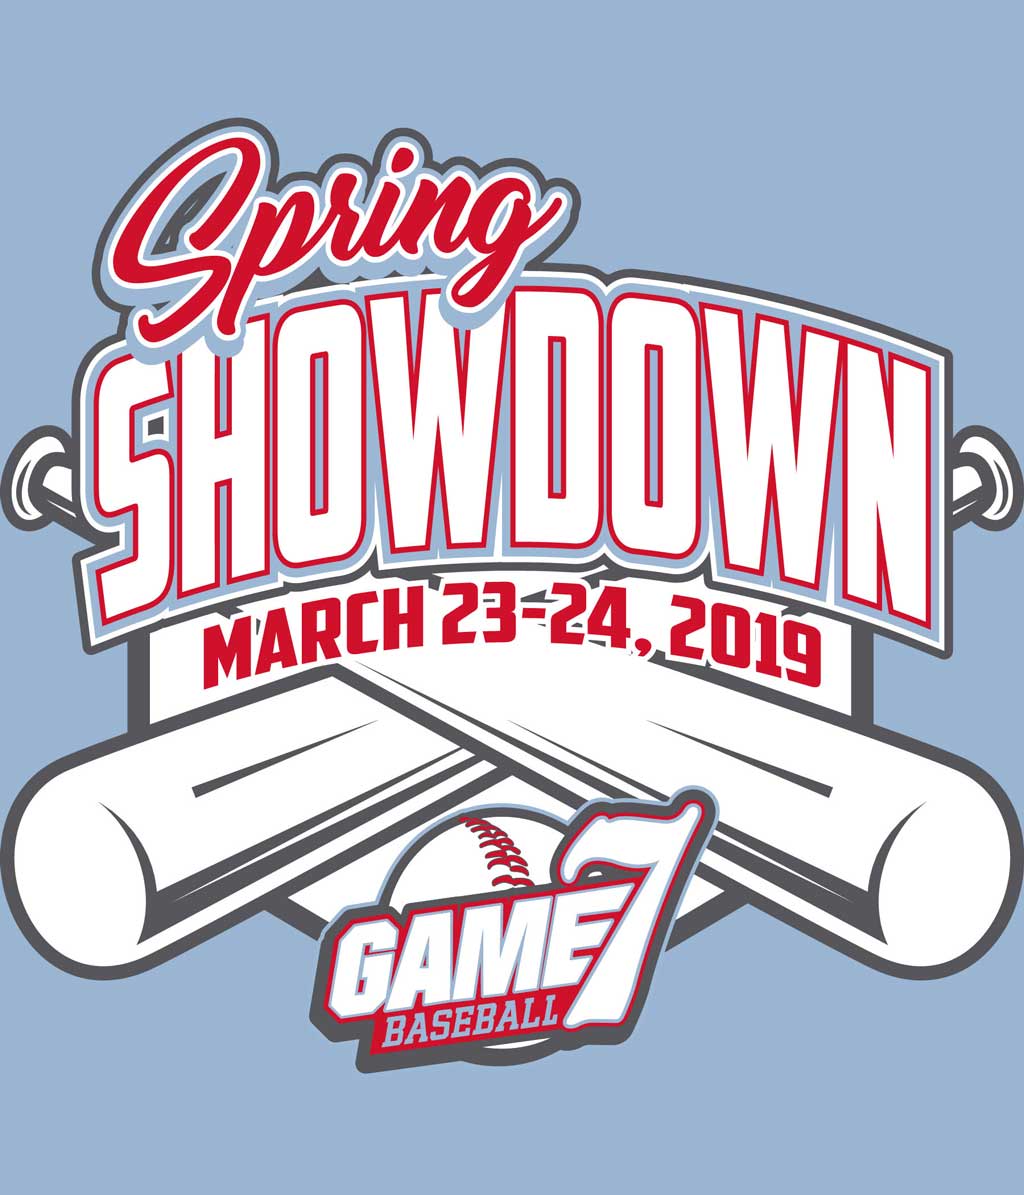 Game 7 Baseball | TN Game 7 Spring Showdown